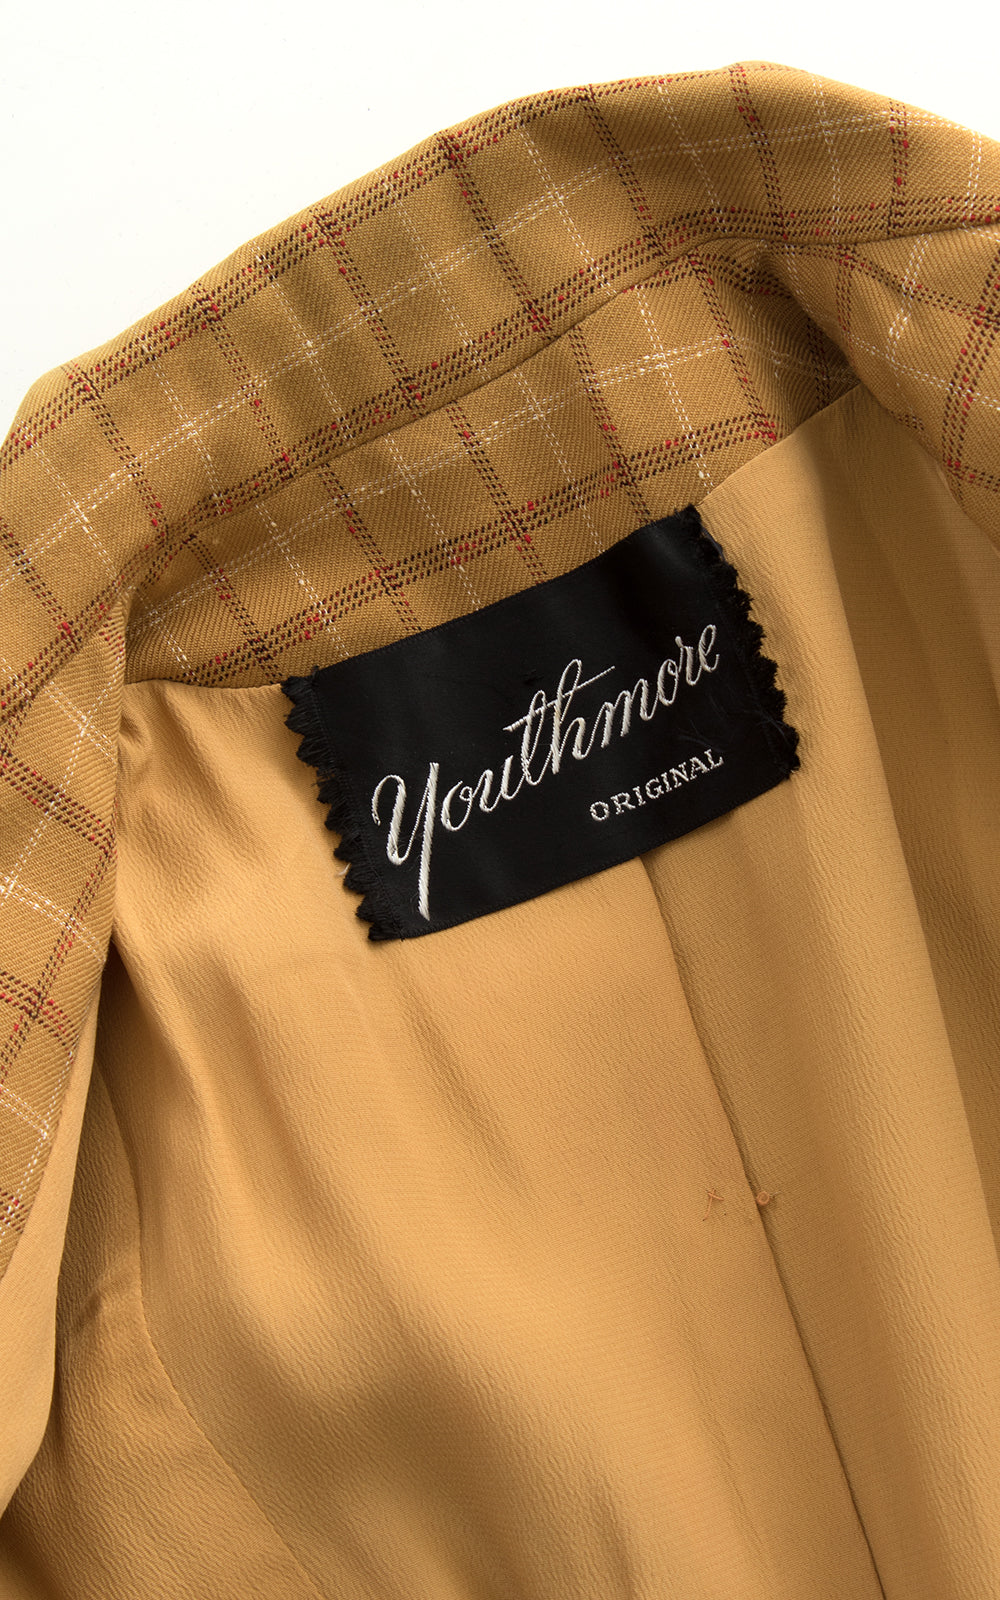 1940s Mustard Plaid Wool Suit Jacket